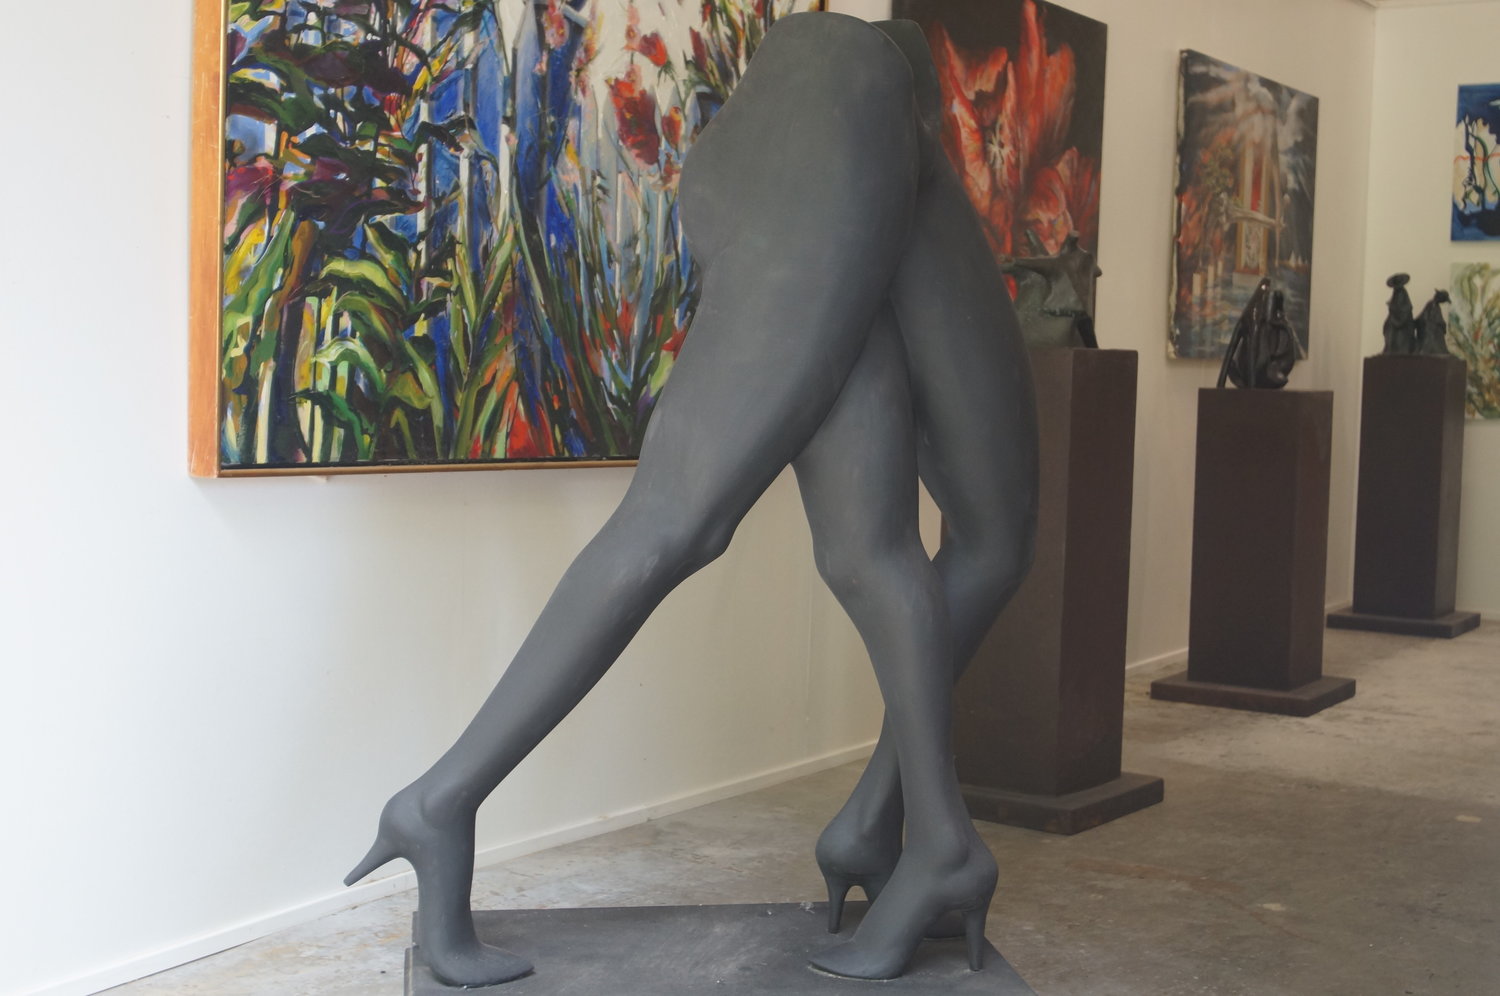 Birch Bay artist Joseph Kinnebrew used wood to carve his sculpture titled, “The Three Legged Women.”